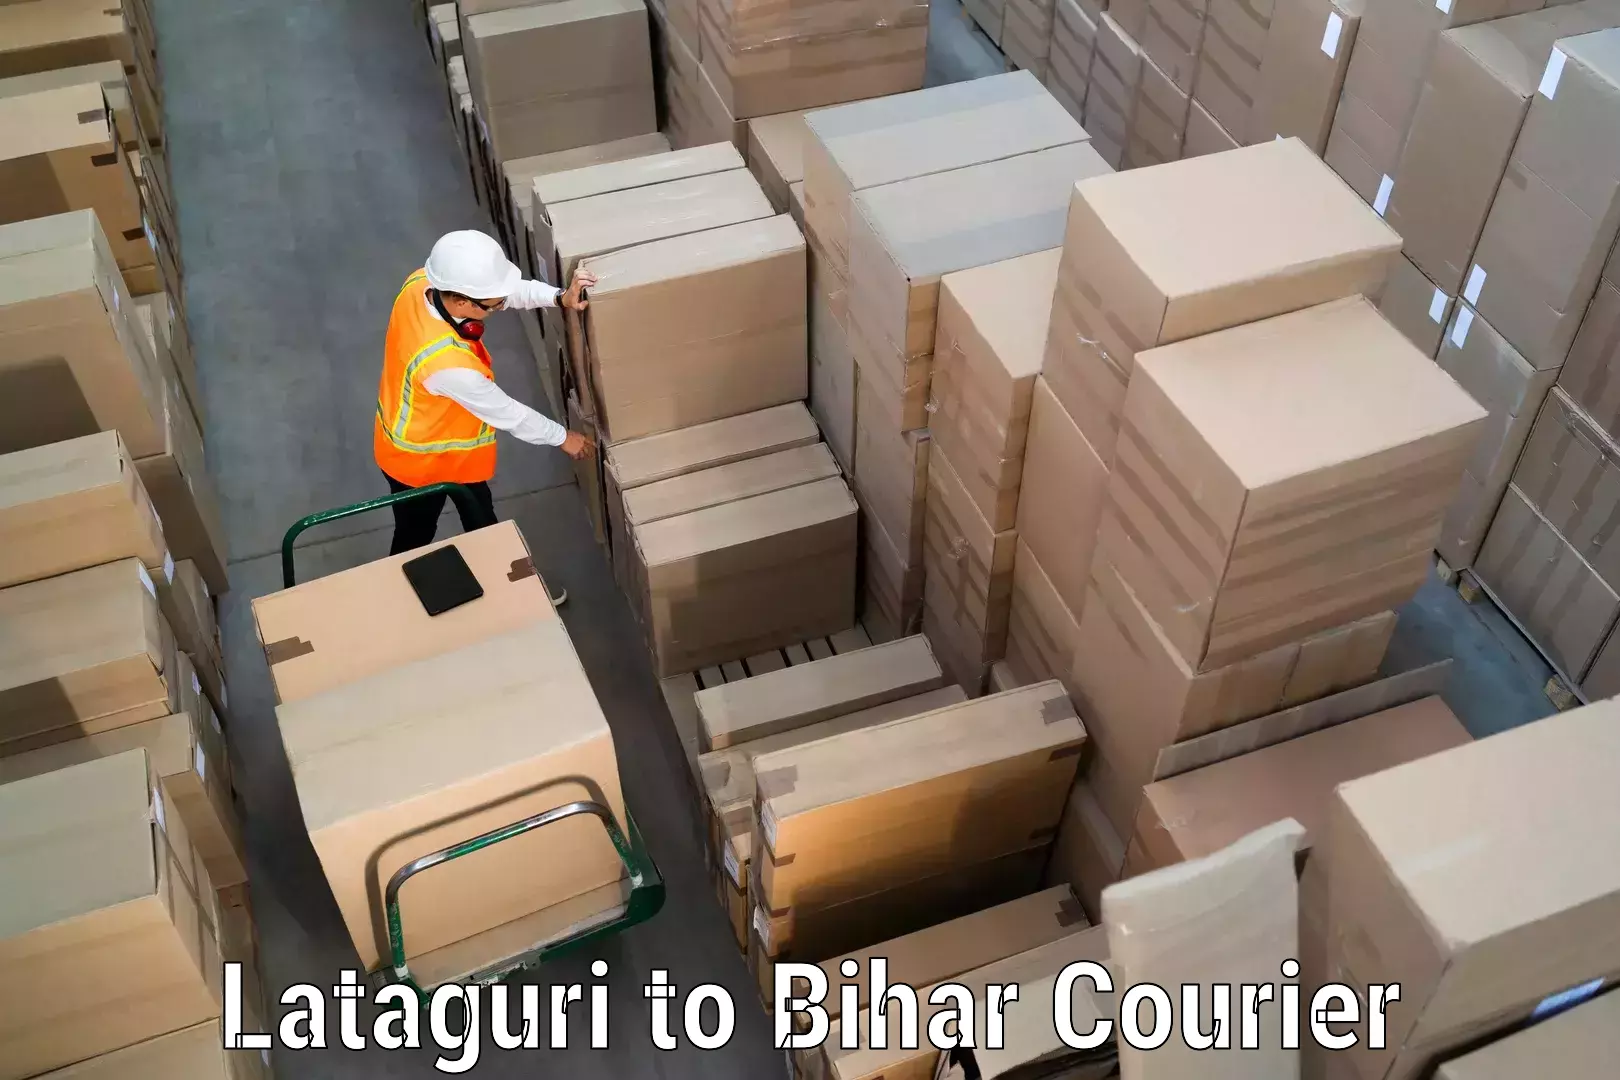 Fast delivery service Lataguri to Bihar